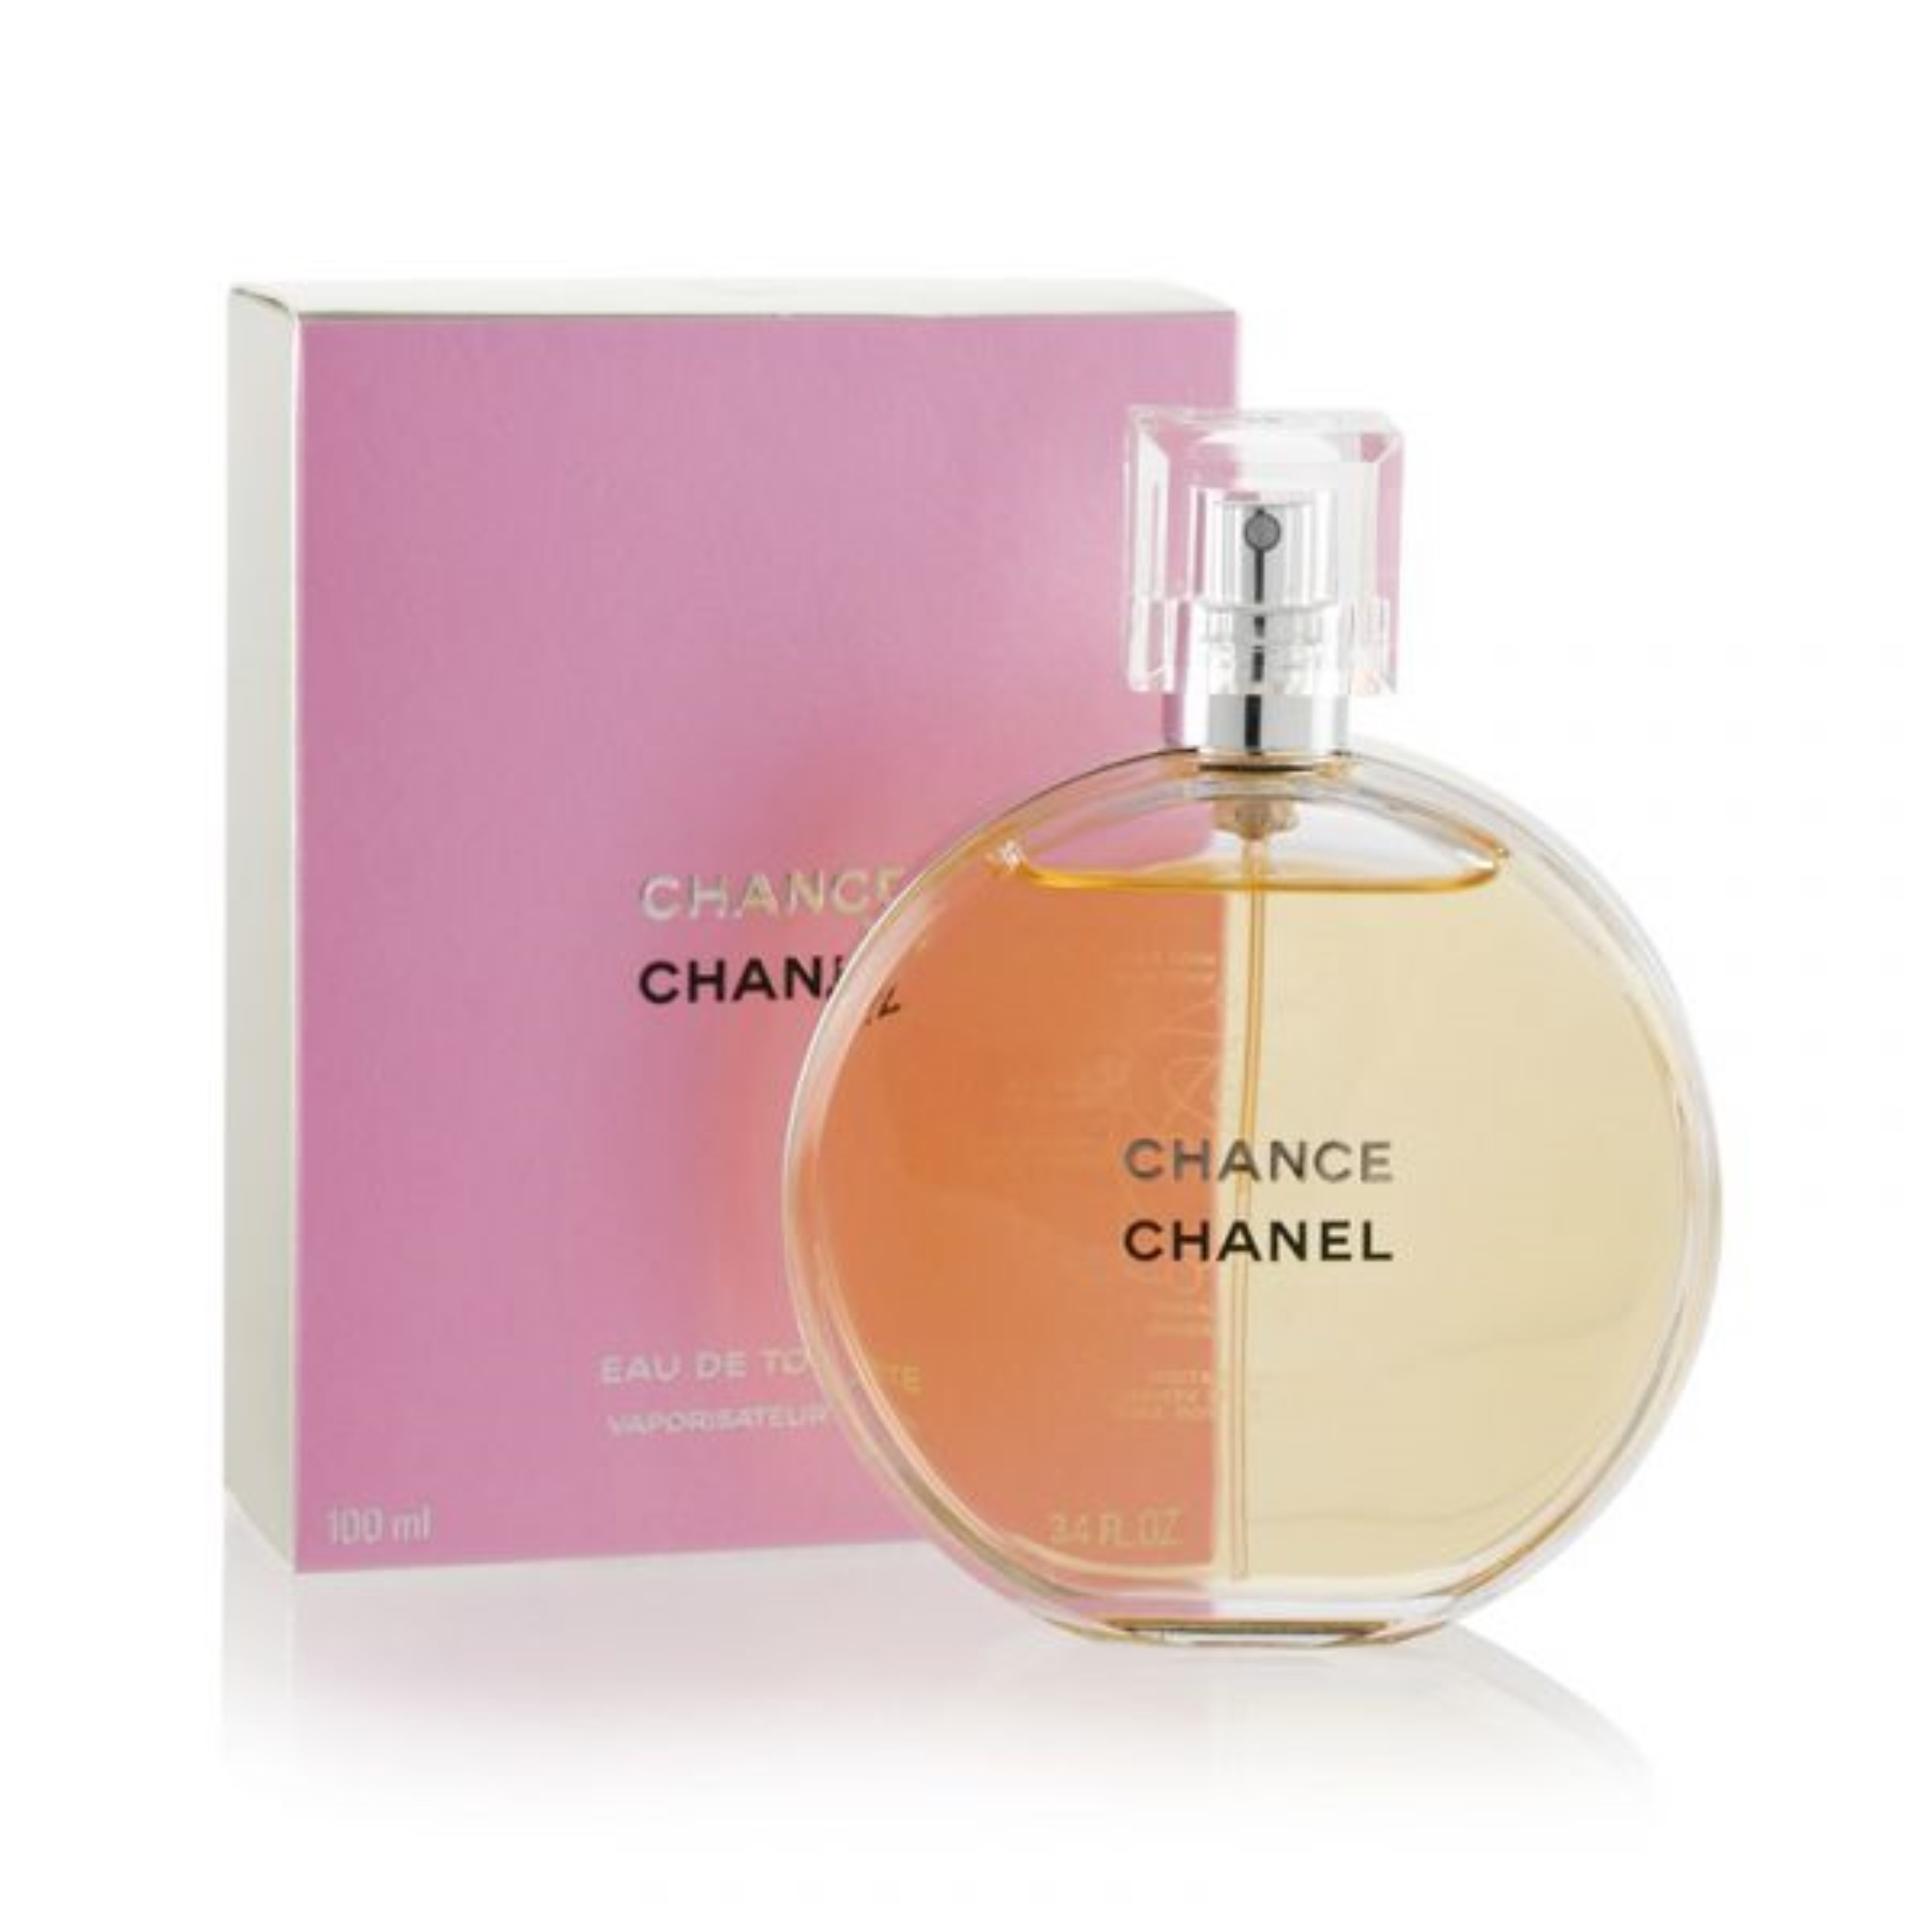 Chanel Perfume Sample Set Clearance  azccomco 1692271236